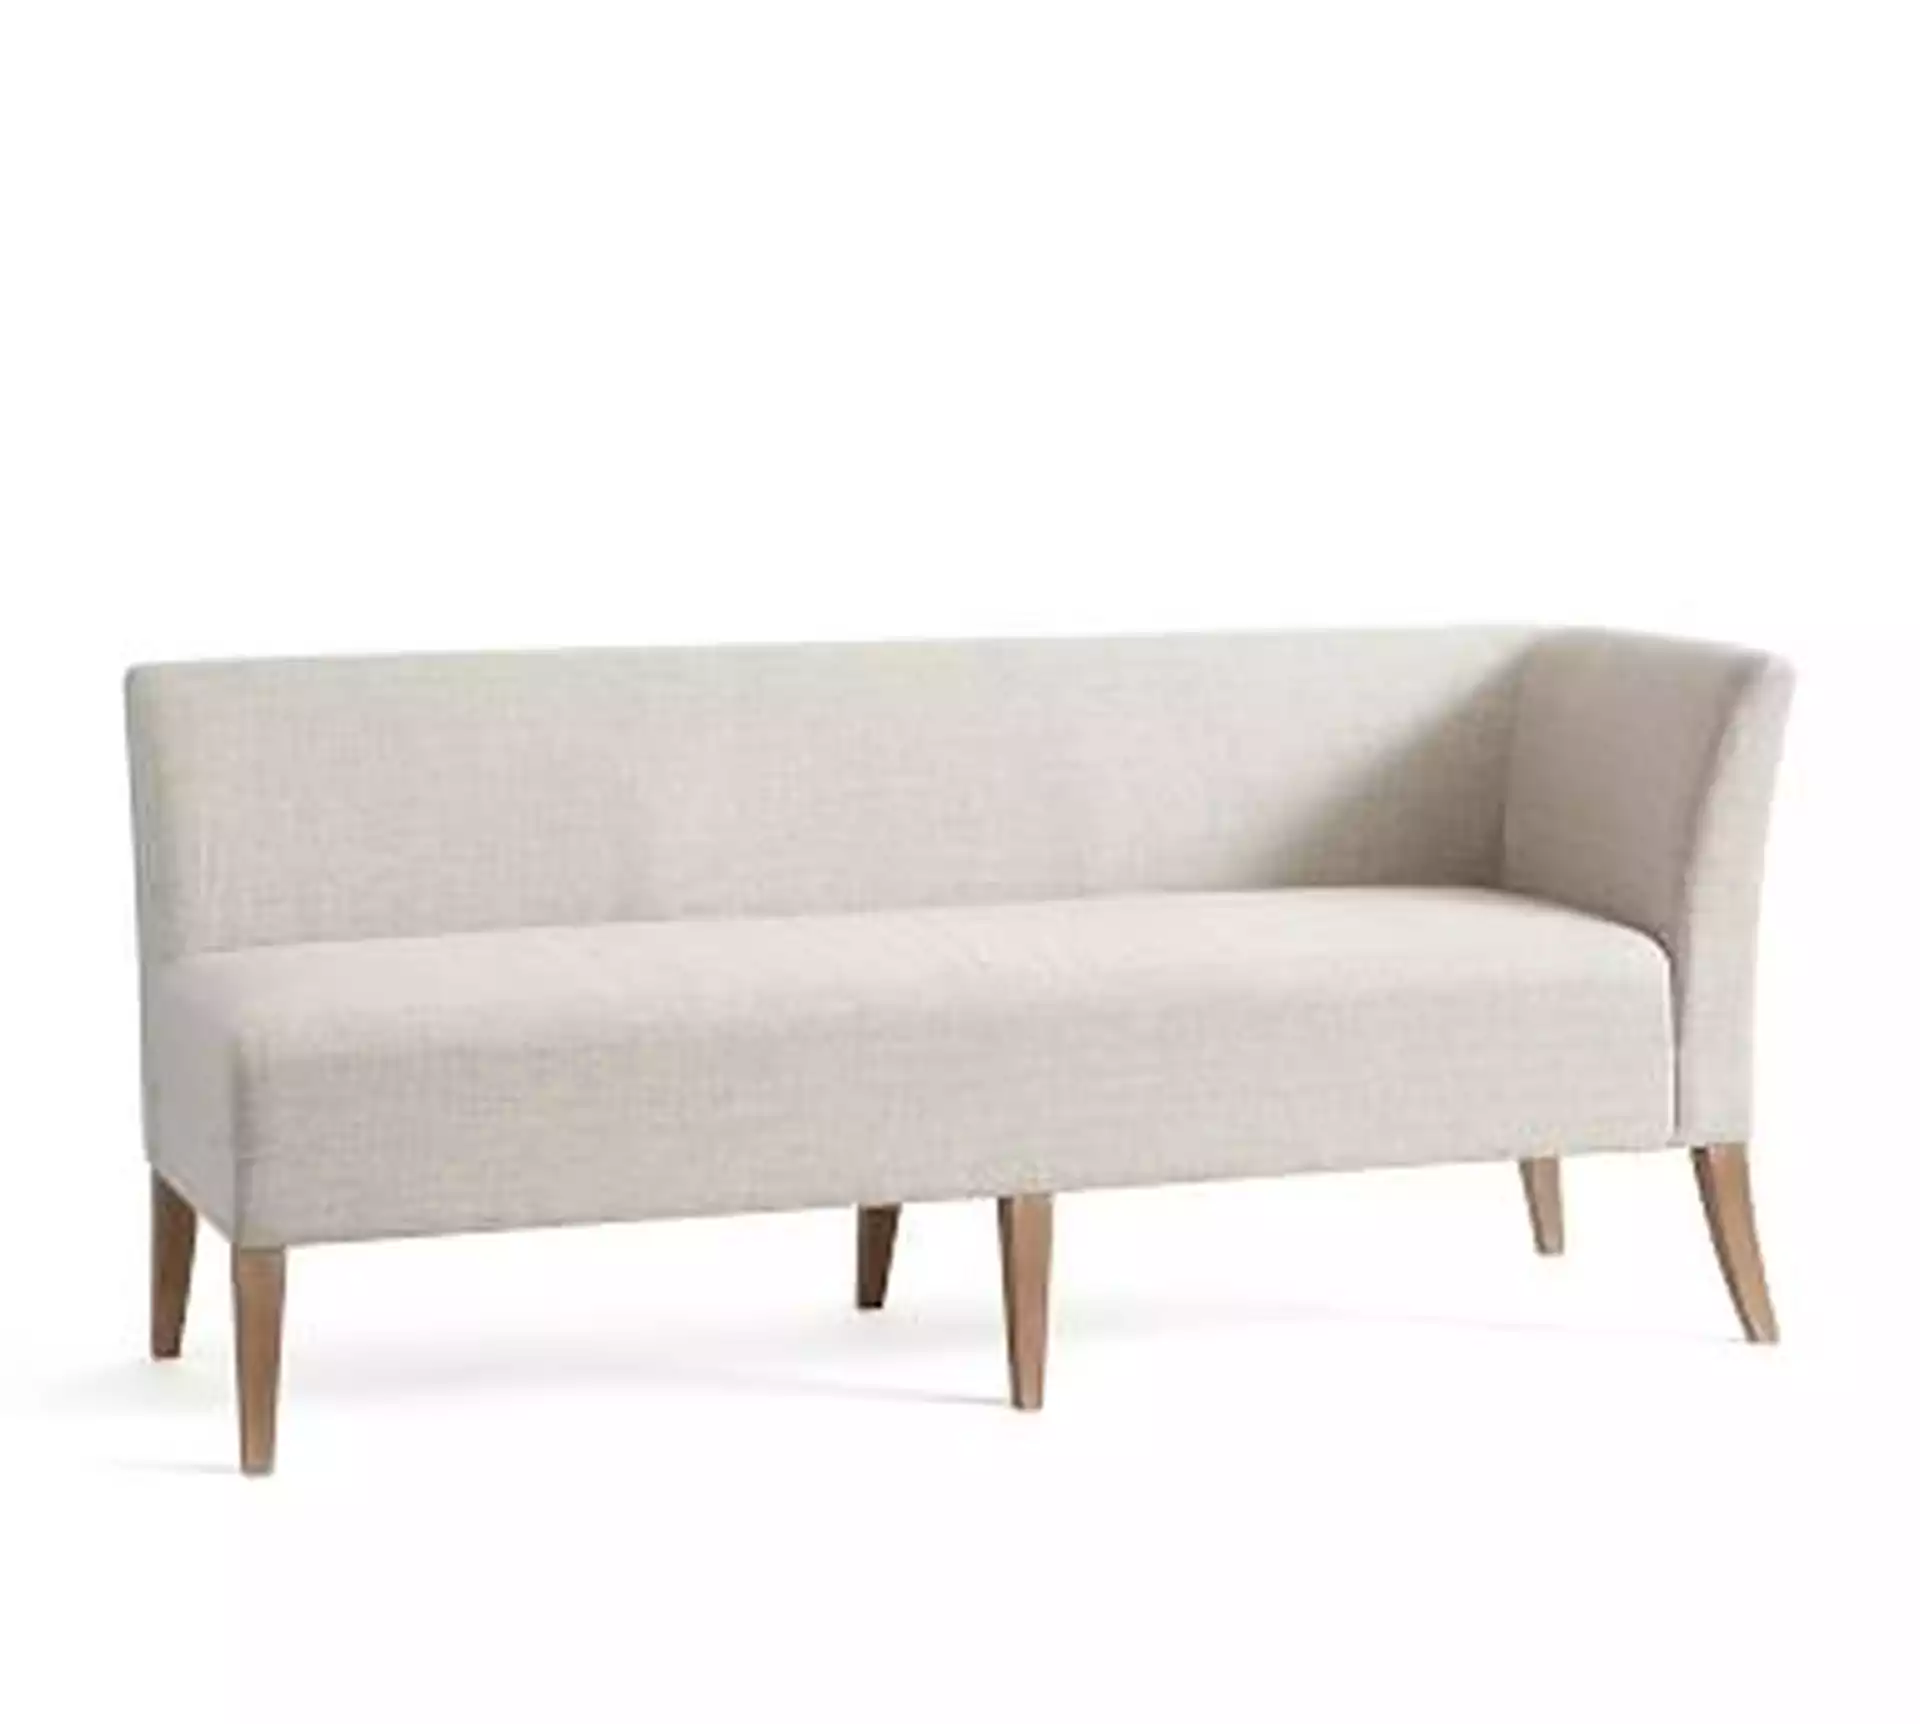 Modular Upholstered Banquette Set, Gray Wash Leg, Brushed Crossweave Charcoal